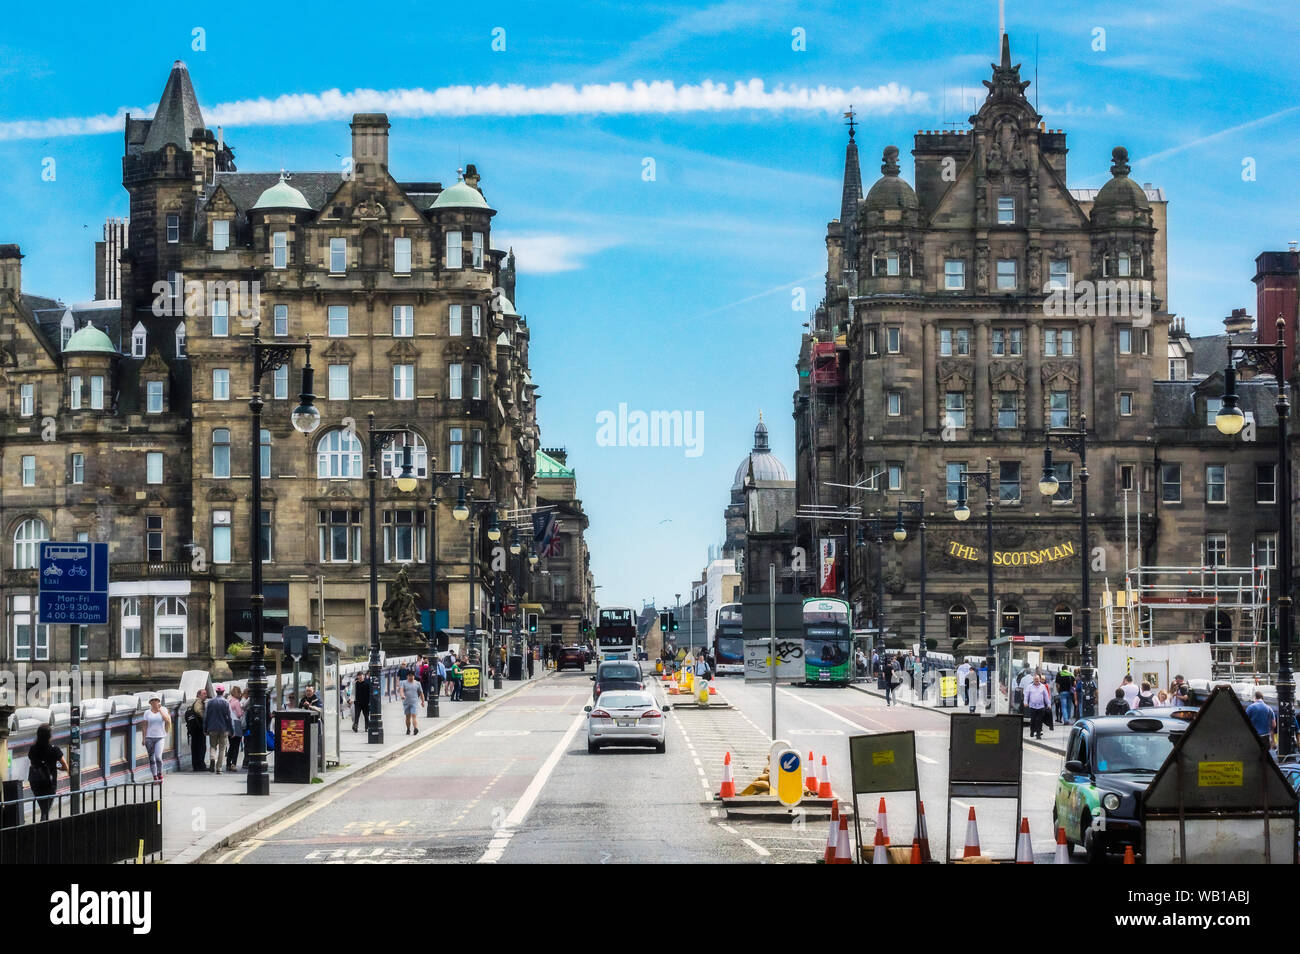 UK, Scotland, Edinburgh, city view Stock Photo